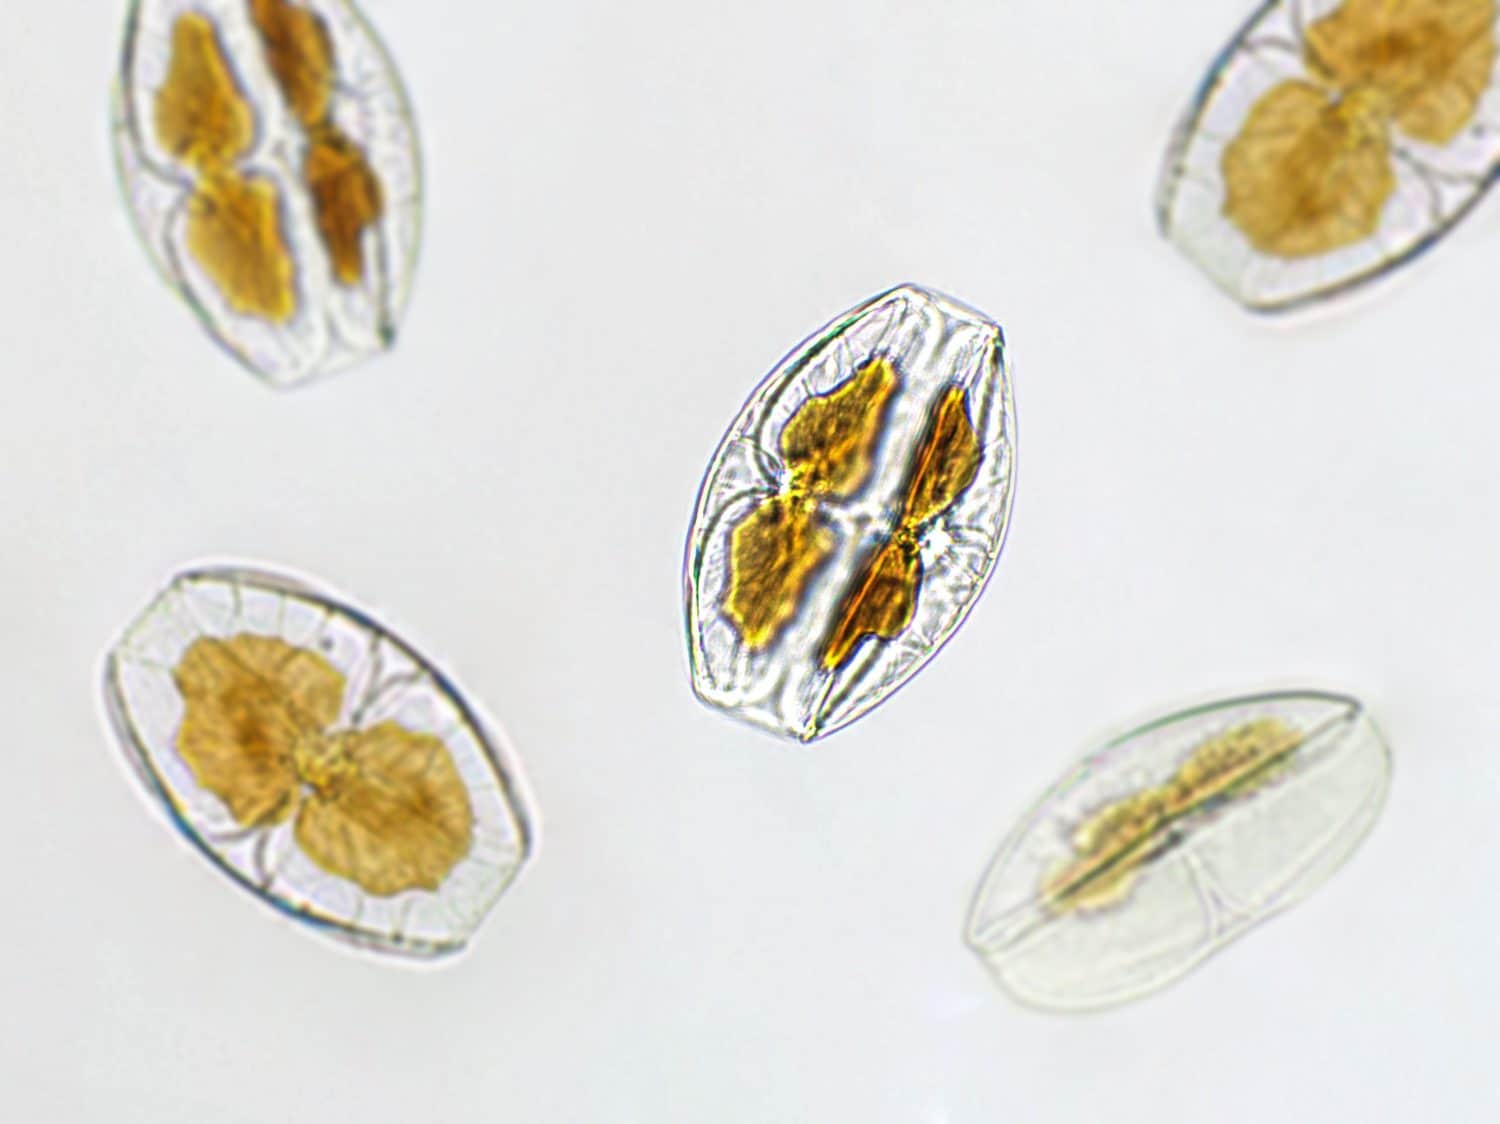 Amphora sp. algae under microscopic view, Diatoms, phytoplankton, fossils, silica, golden yellow algae